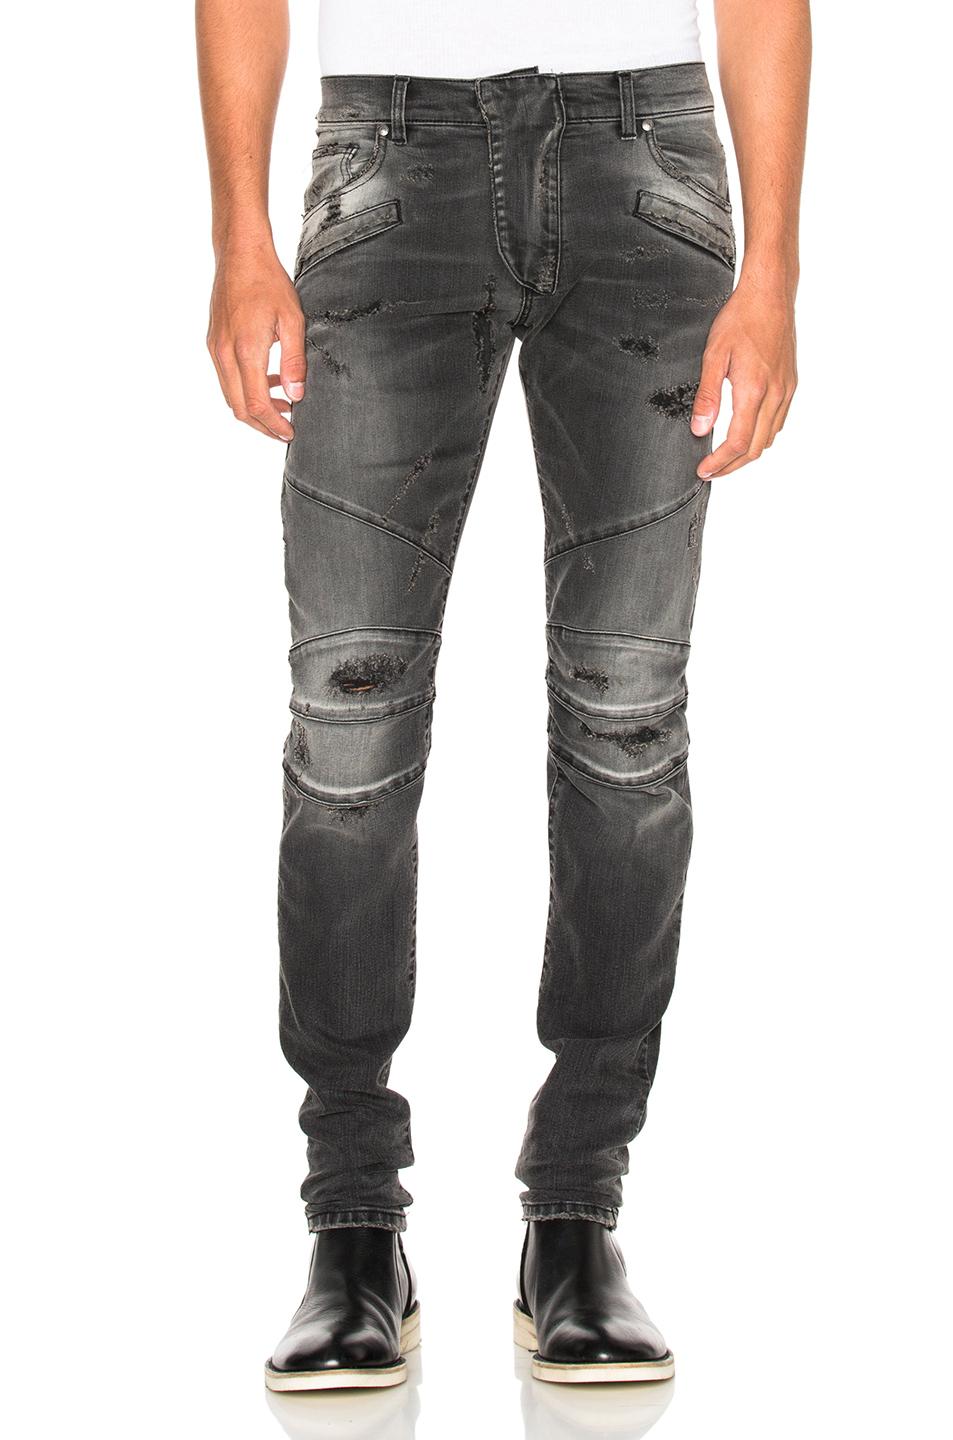 Lyst - Balmain Jeans in Black for Men